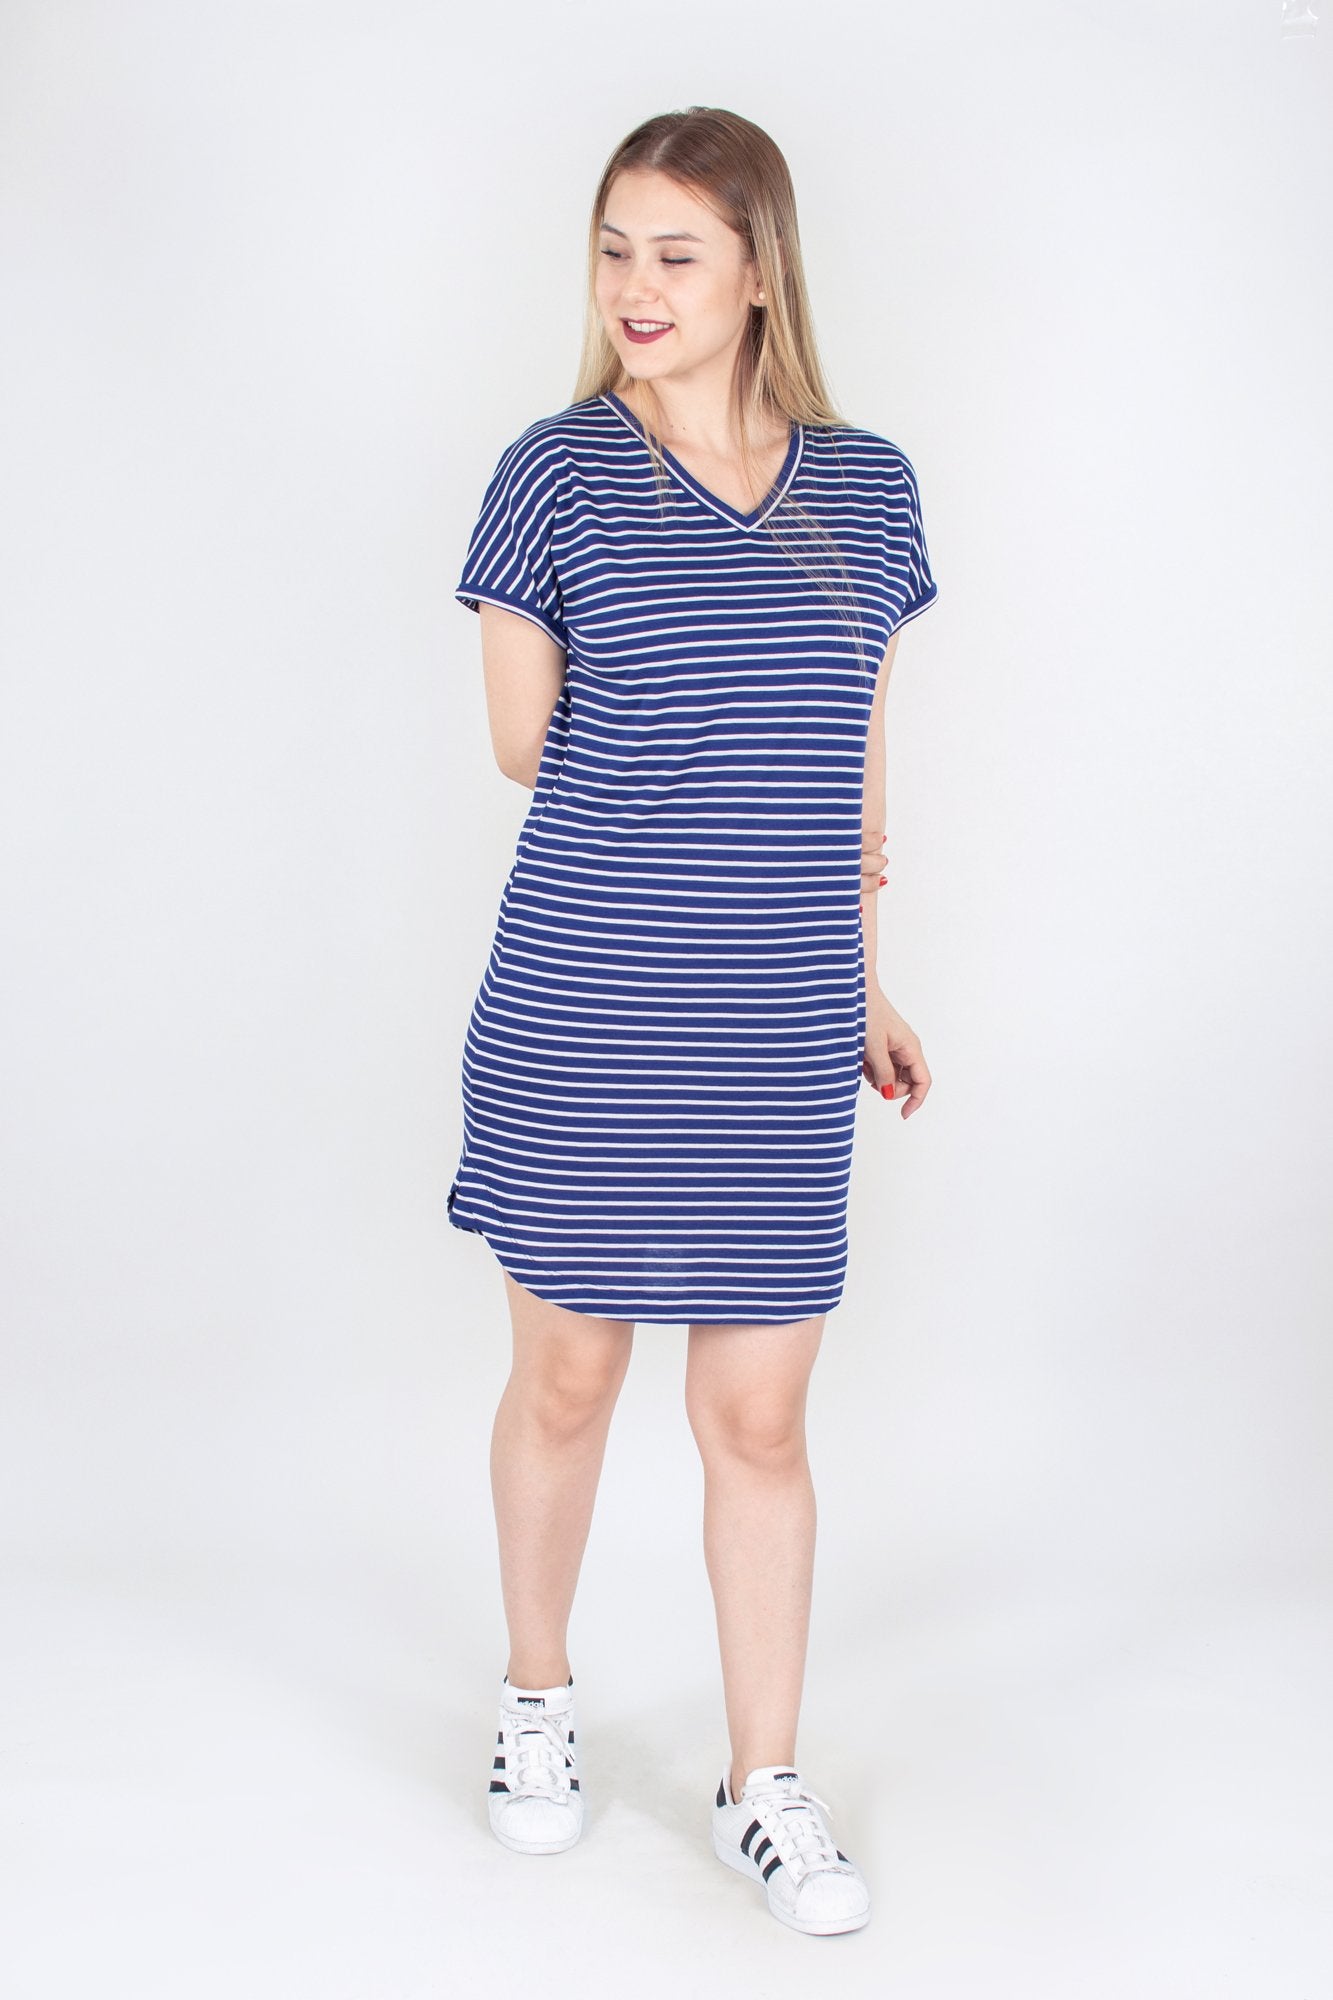 chassca v-neck short sleeve blue/navy stripe  tunic dress - Breakmood